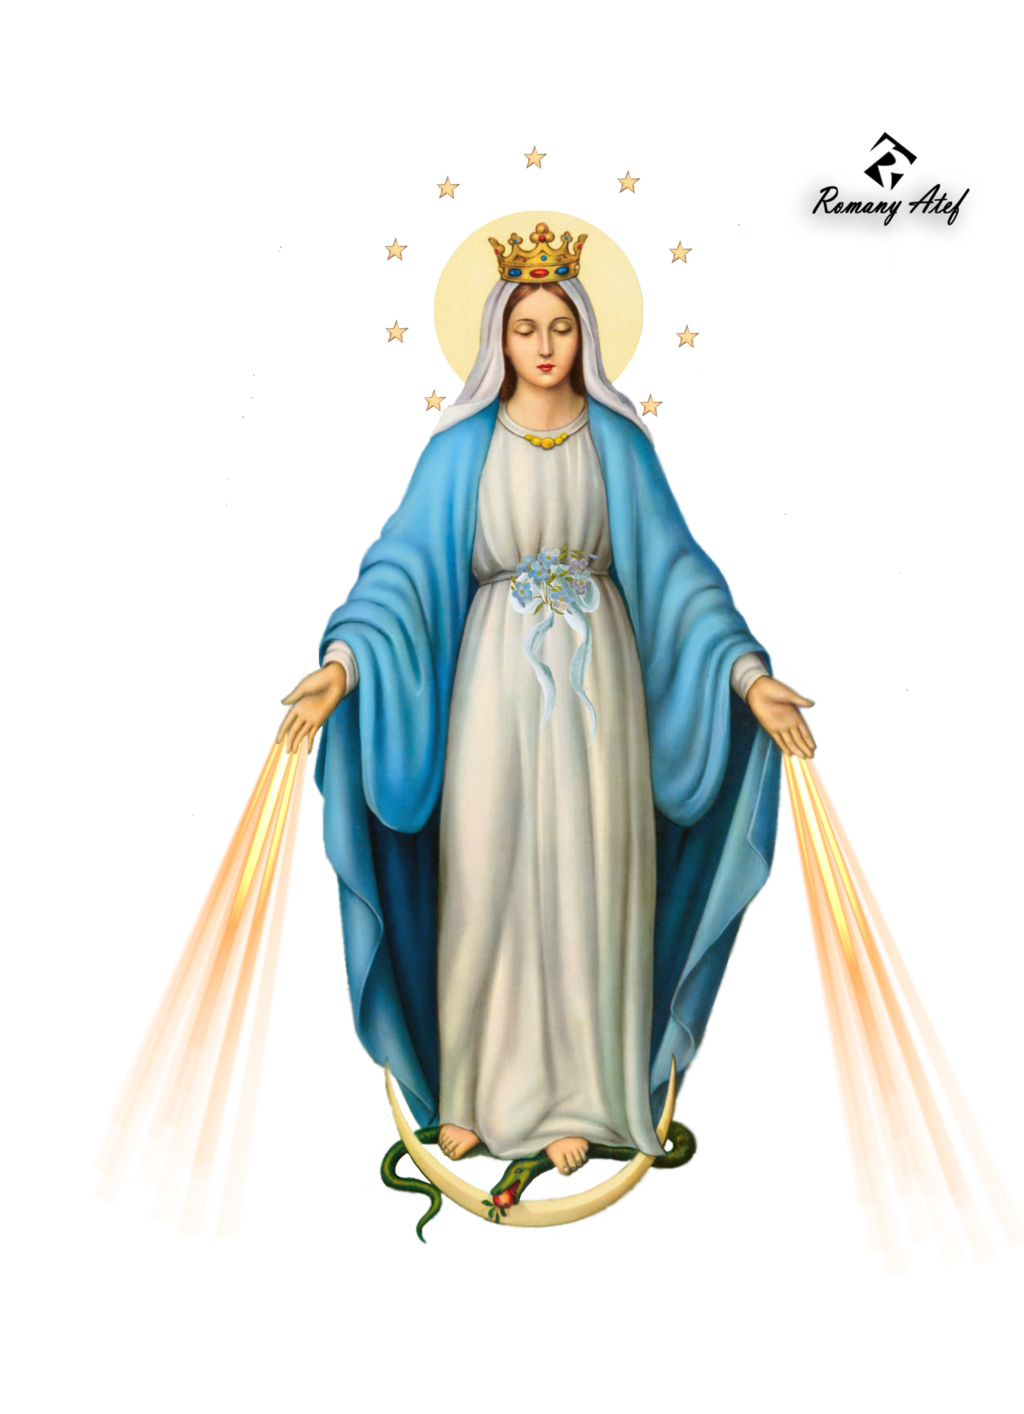 The Virgin Mary, West, Idol, 